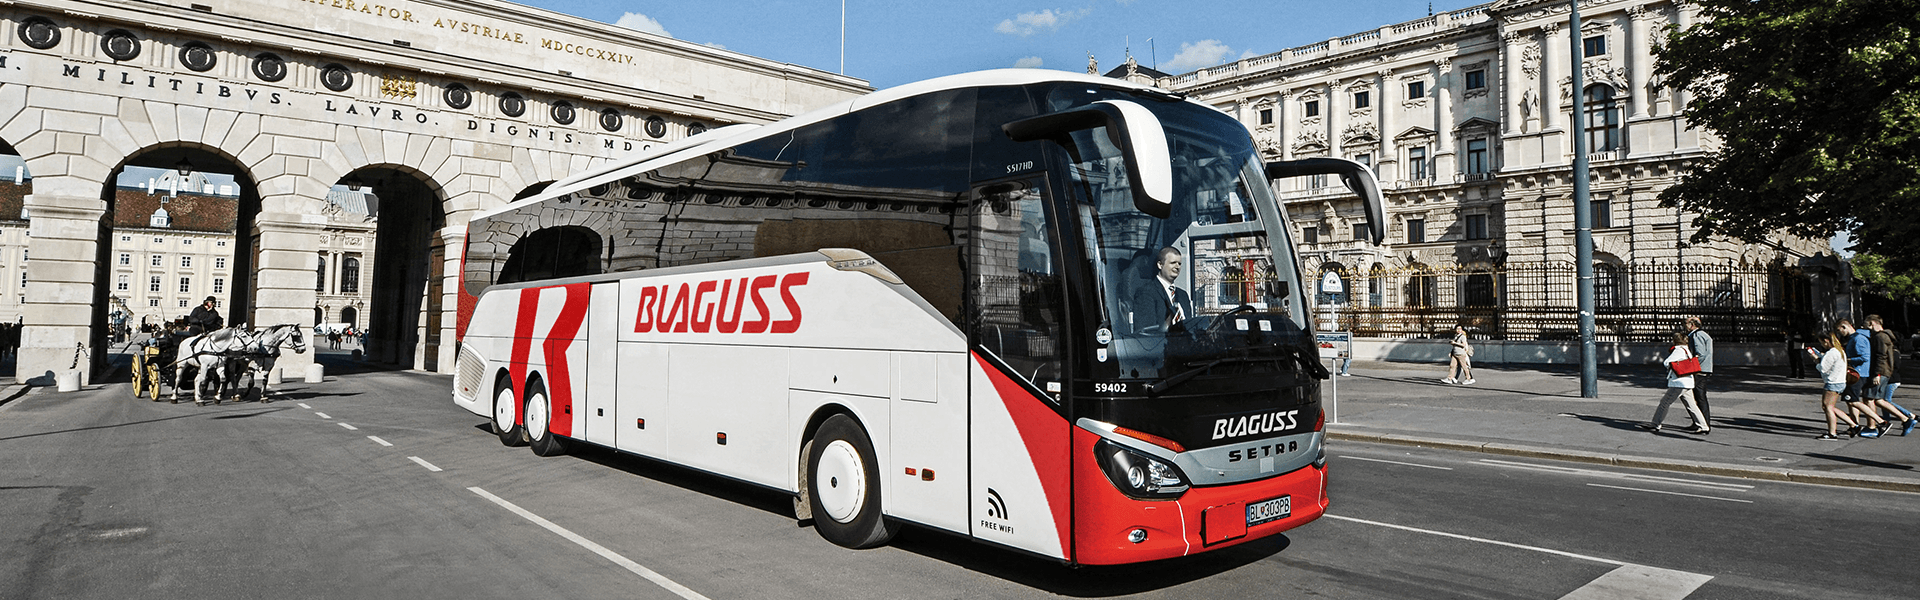 Blaguss Bus vor Hofburg Wien